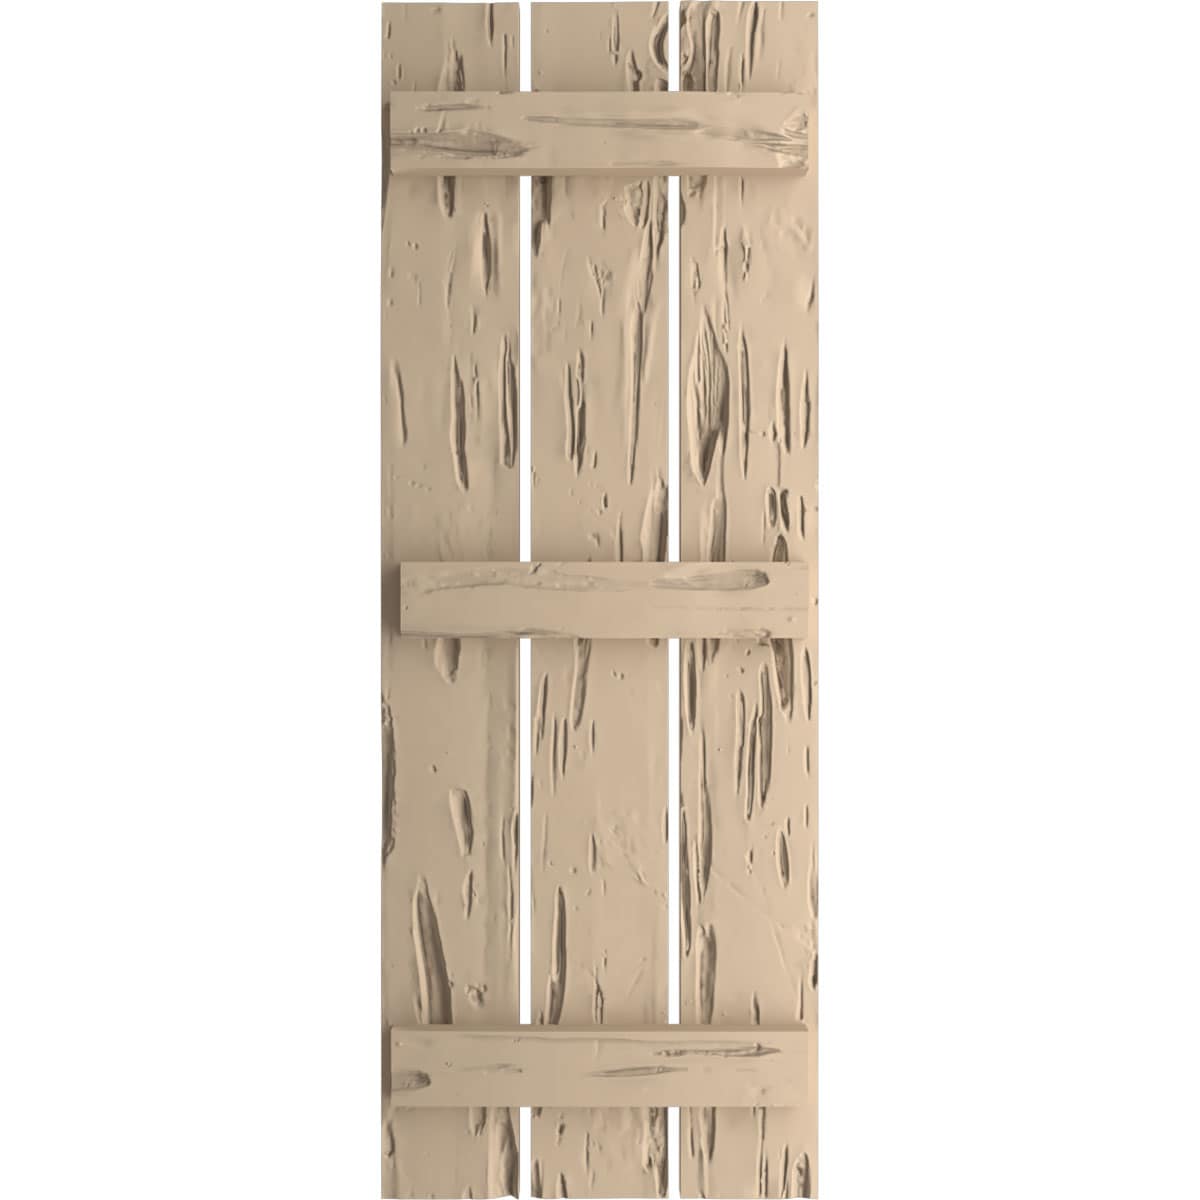 Ekena Millwork EB0110500X035500CUN Exterior Composite Wood Three Board Two Batten Board-n-Batten Shutters with Installation Brackets 10 1/2W x 35 1/2H 10 1/2W x 35 1/2H Unfinished Per Pair